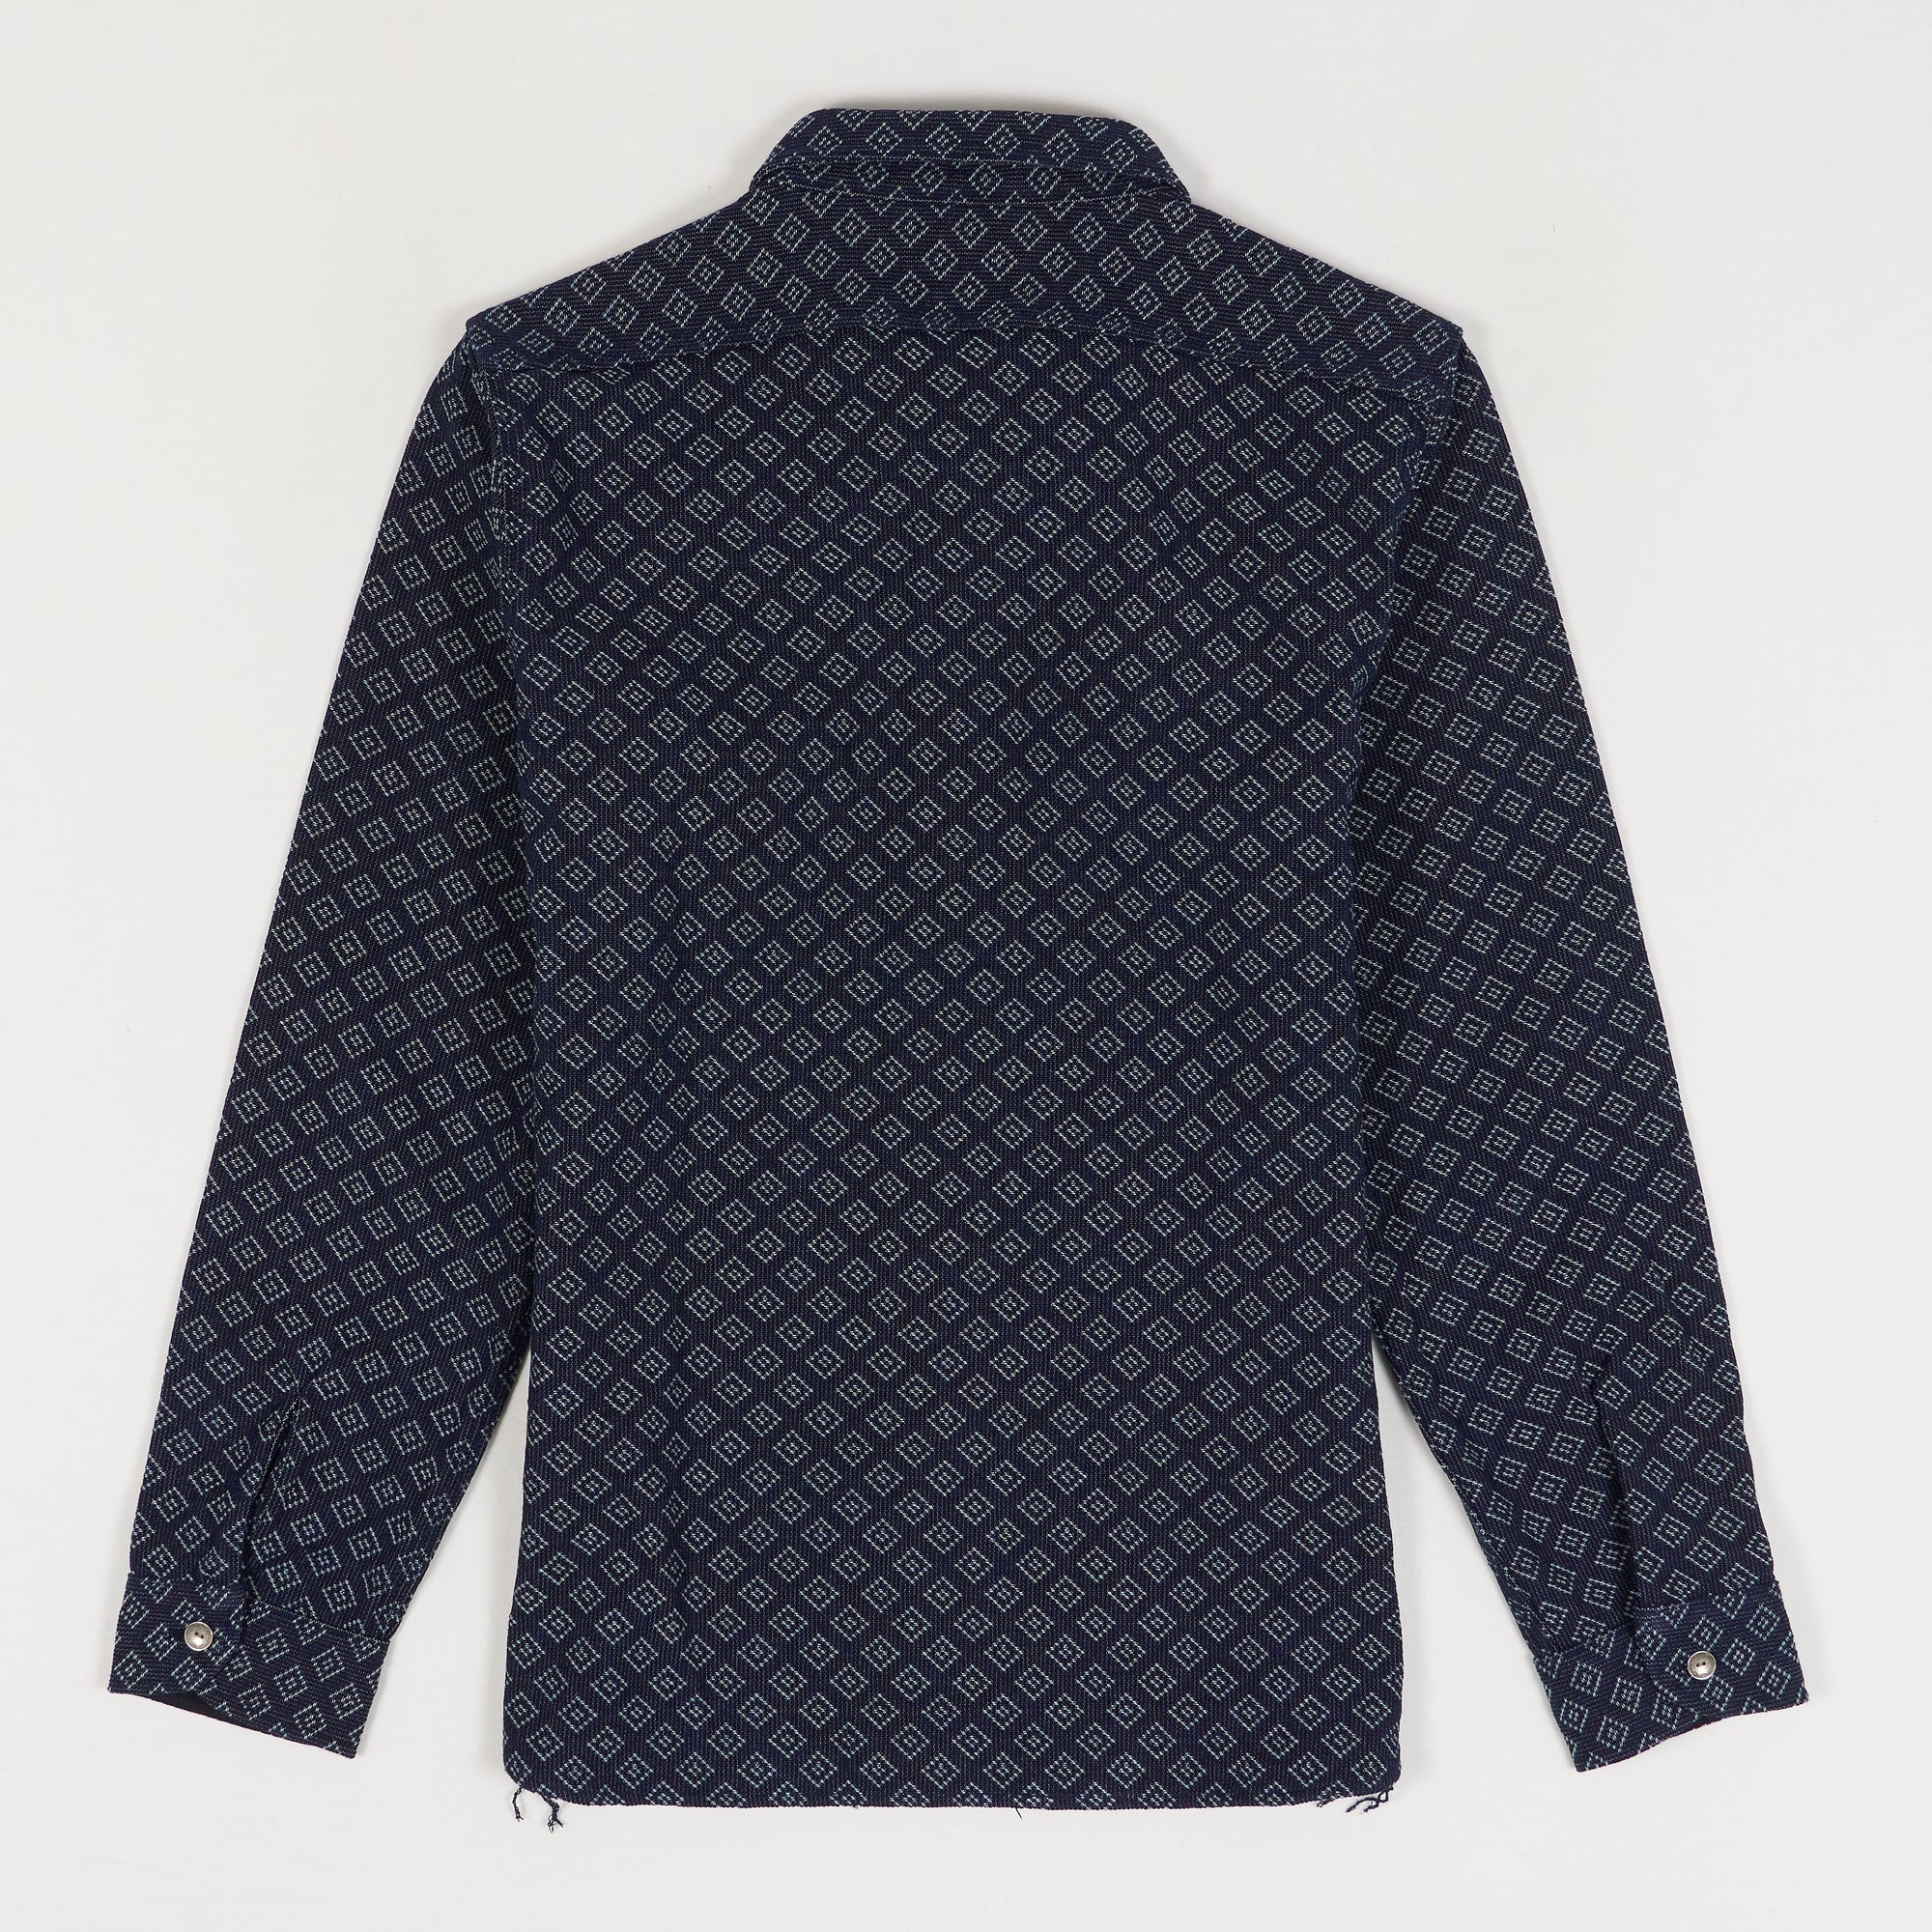 Louis Vuitton Monogram Workwear Short-sleeved Shirt ECRU. Size S0